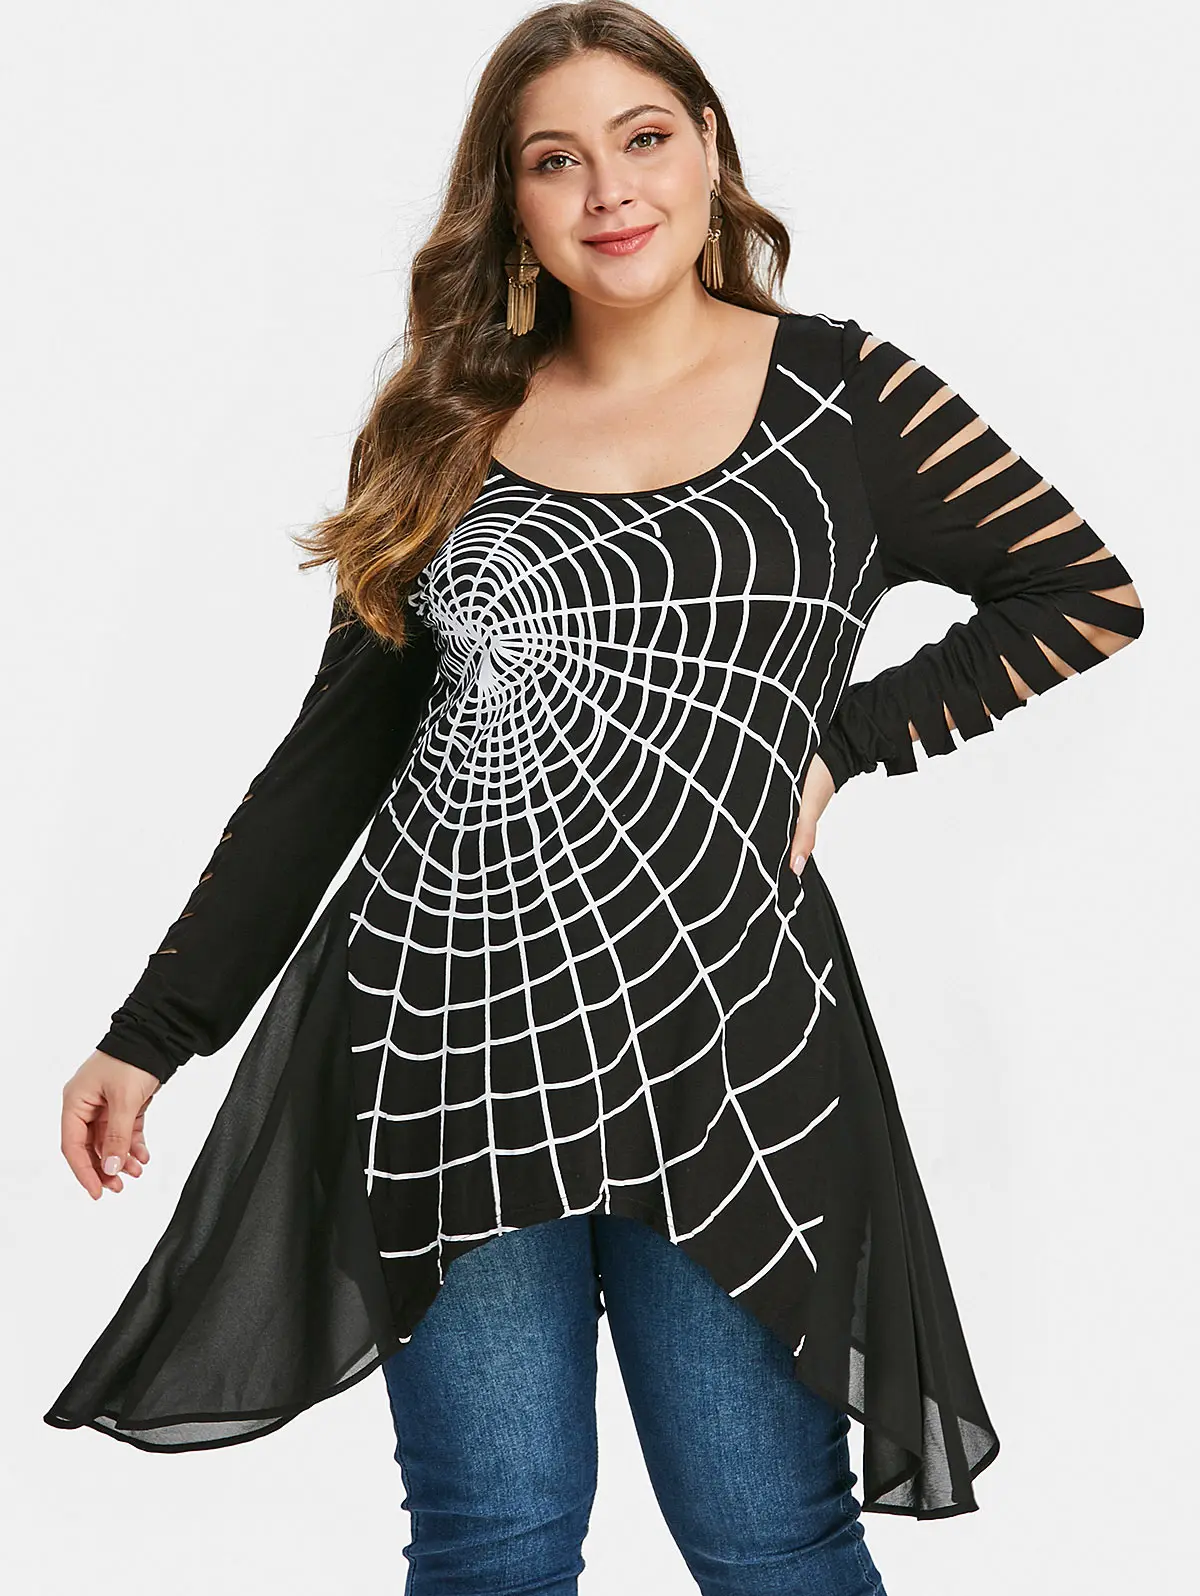 Aliexpress.com : Buy Wipalo Women Plus Size Spider Web Print Halloween ...